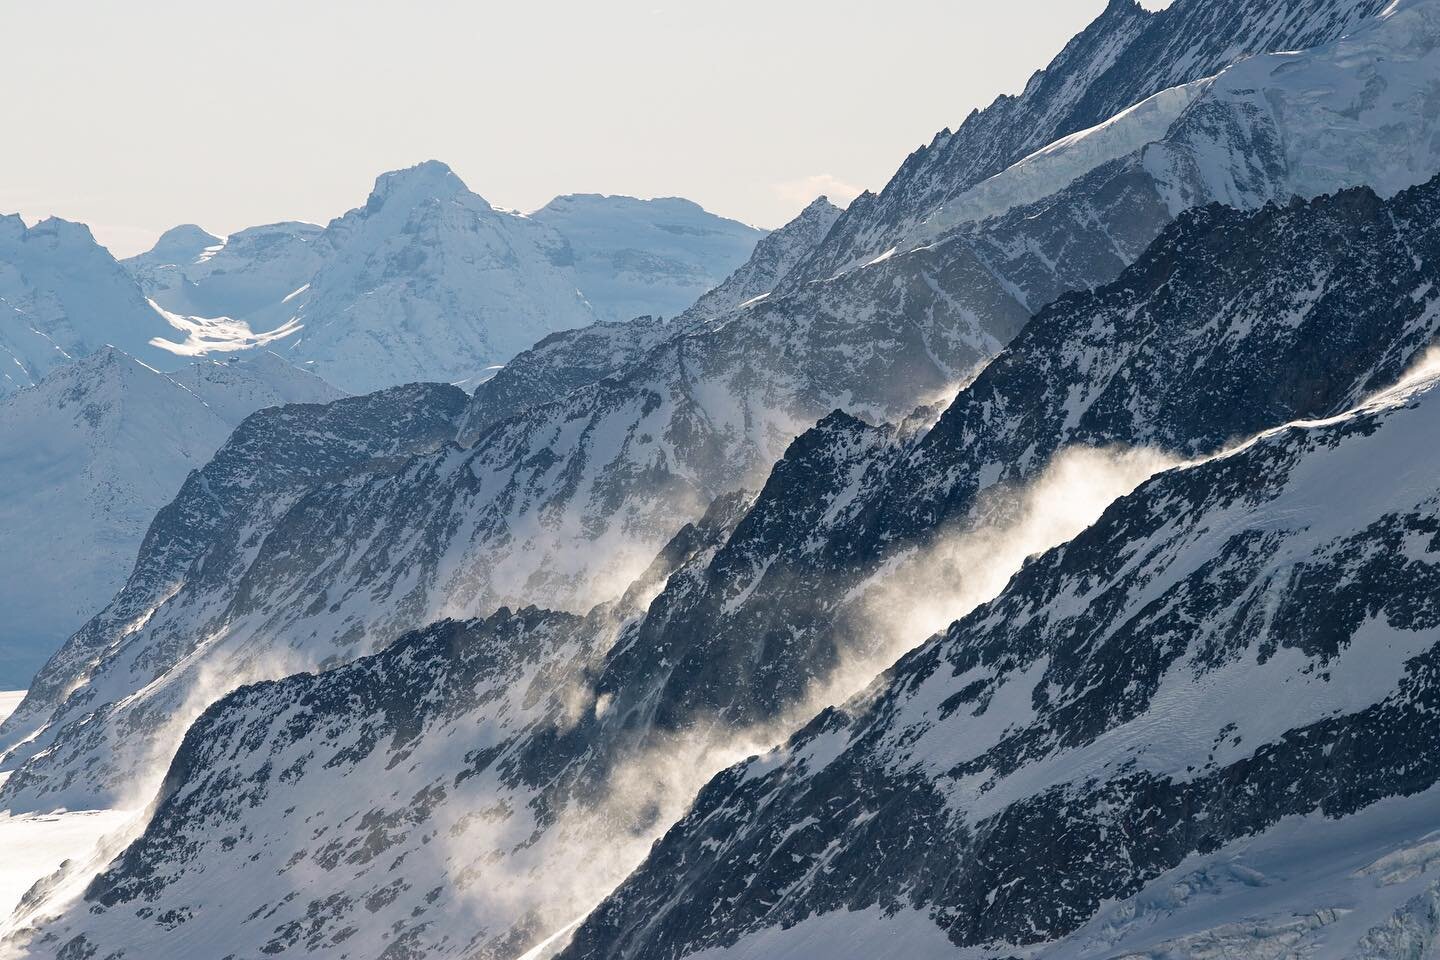 Sunrise catches the mist and snowdrift high in the alps
⠀⠀⠀⠀⠀⠀⠀⠀⠀
#alps #jungfrau #mountain #mist #snow #landscape #photography #landscapephotography #switzerland #dieschweiz #landschaft #foto #travel